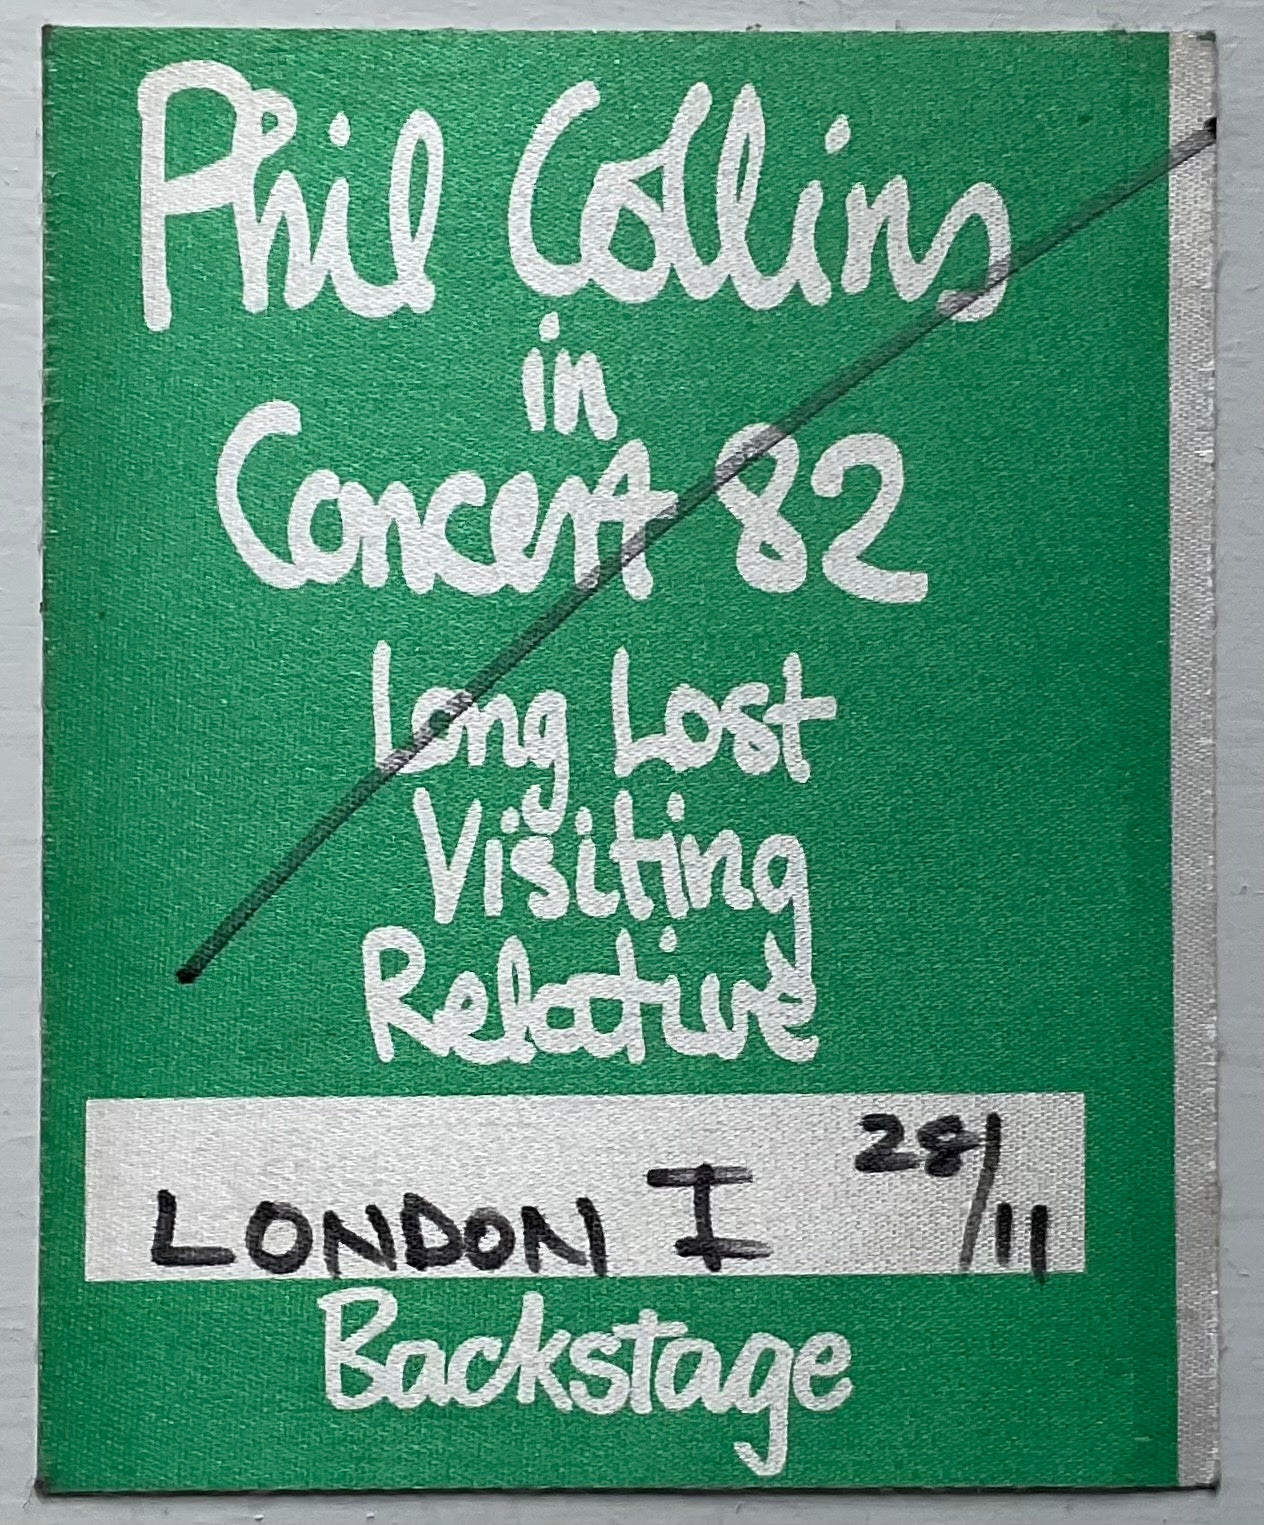 Phil Collins Original Unused Concert Backstage Pass Ticket Hammersmith Odeon London 28th Nov 1982